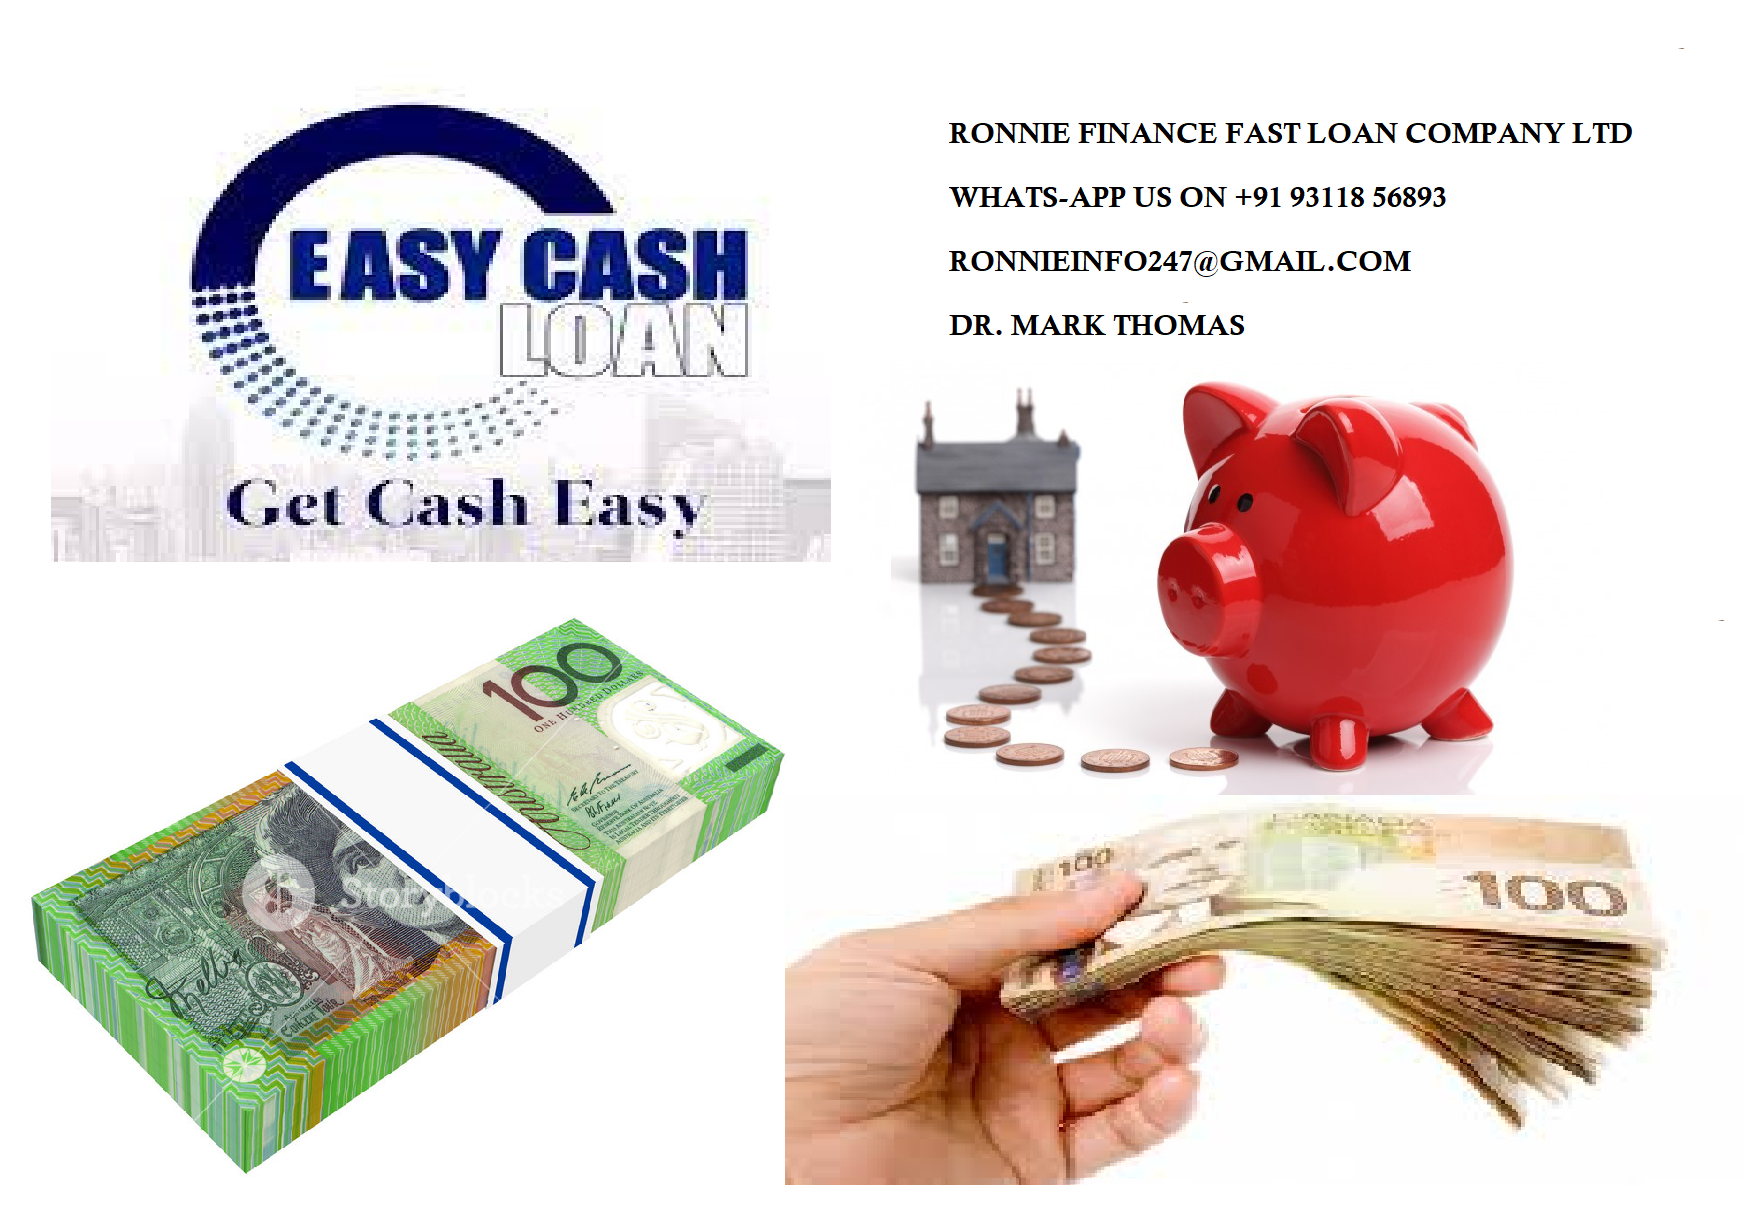 Ronnie Finance Fast Loan Company Ltd